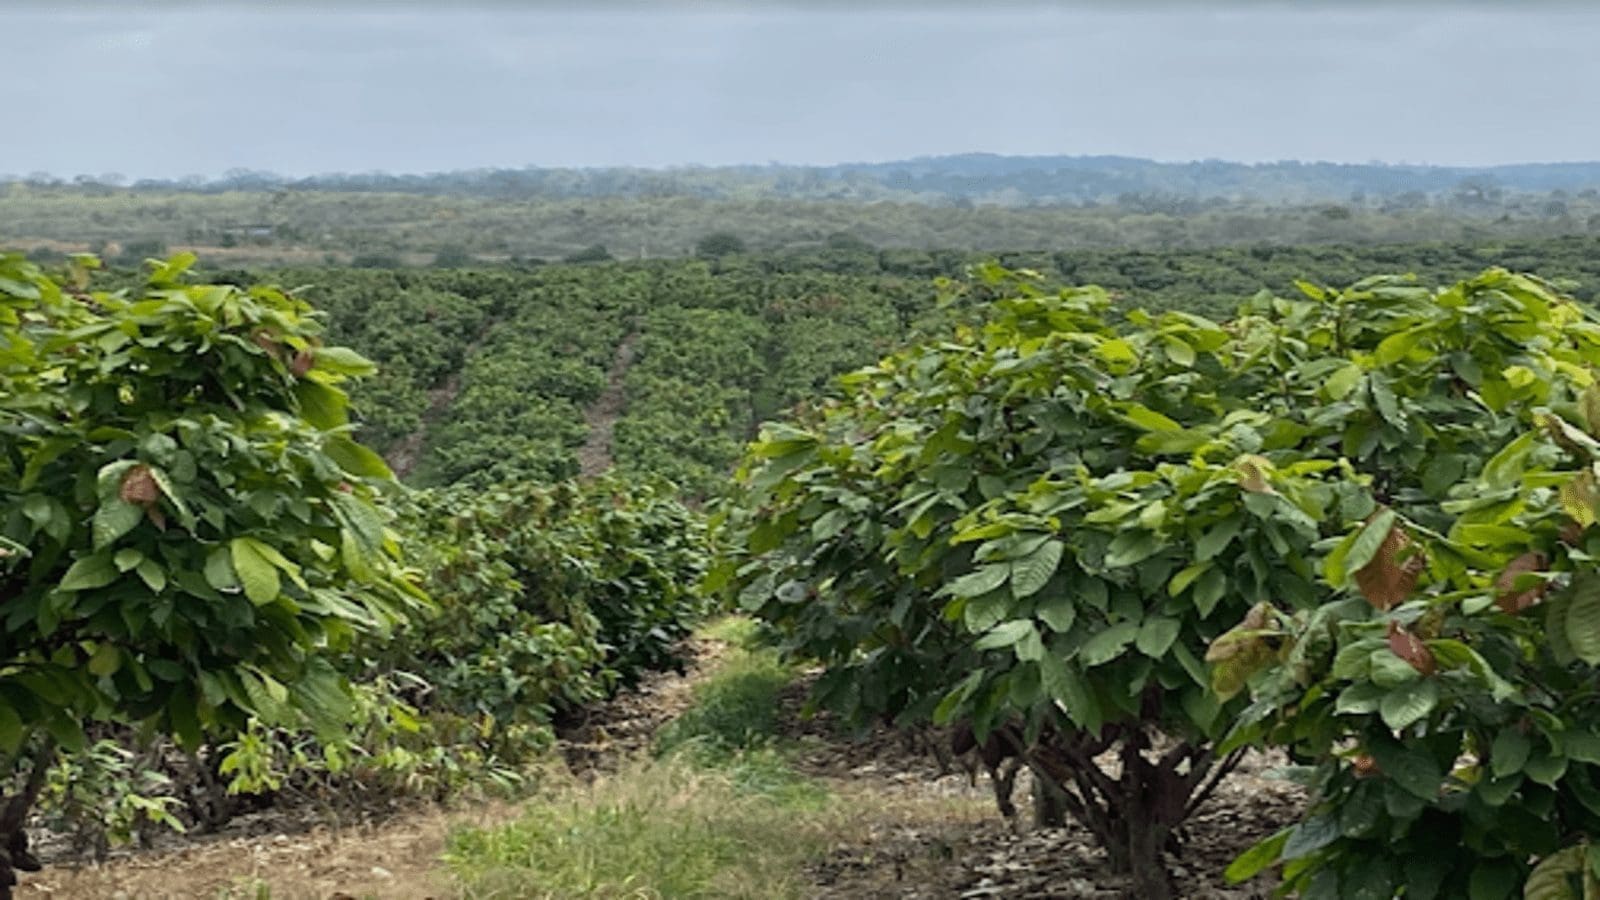 Barry Callebaut establishes cocoa research farm as Nestlé makes progress towards deforestation-free cocoa